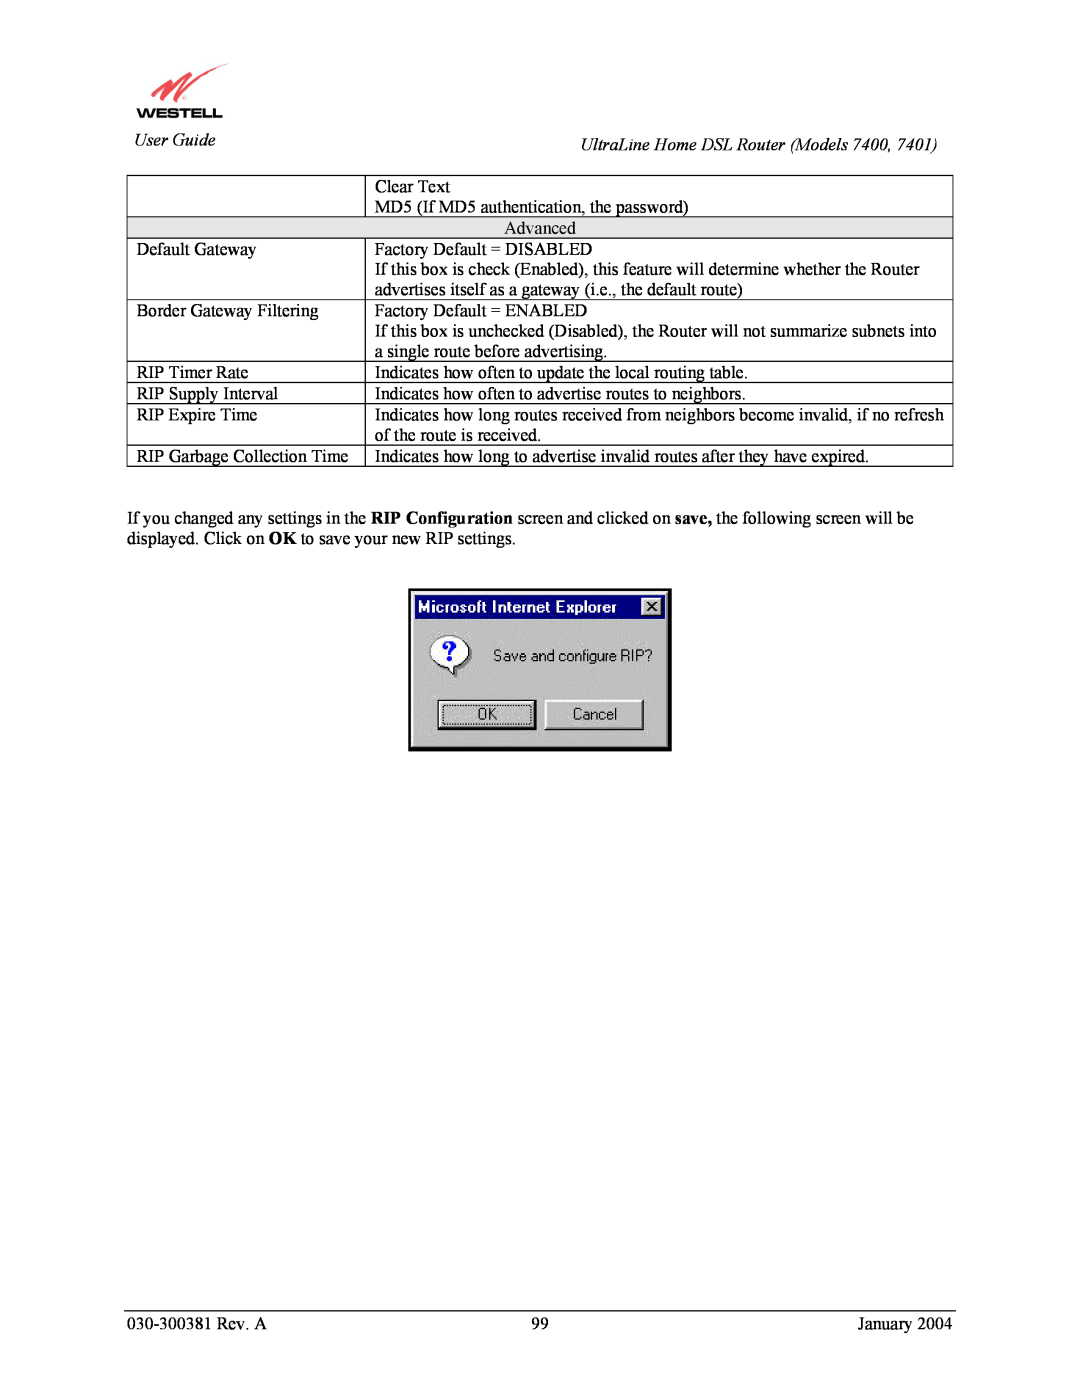 Westell Technologies 7400, 7401 manual 030-300381 Rev. A, January 